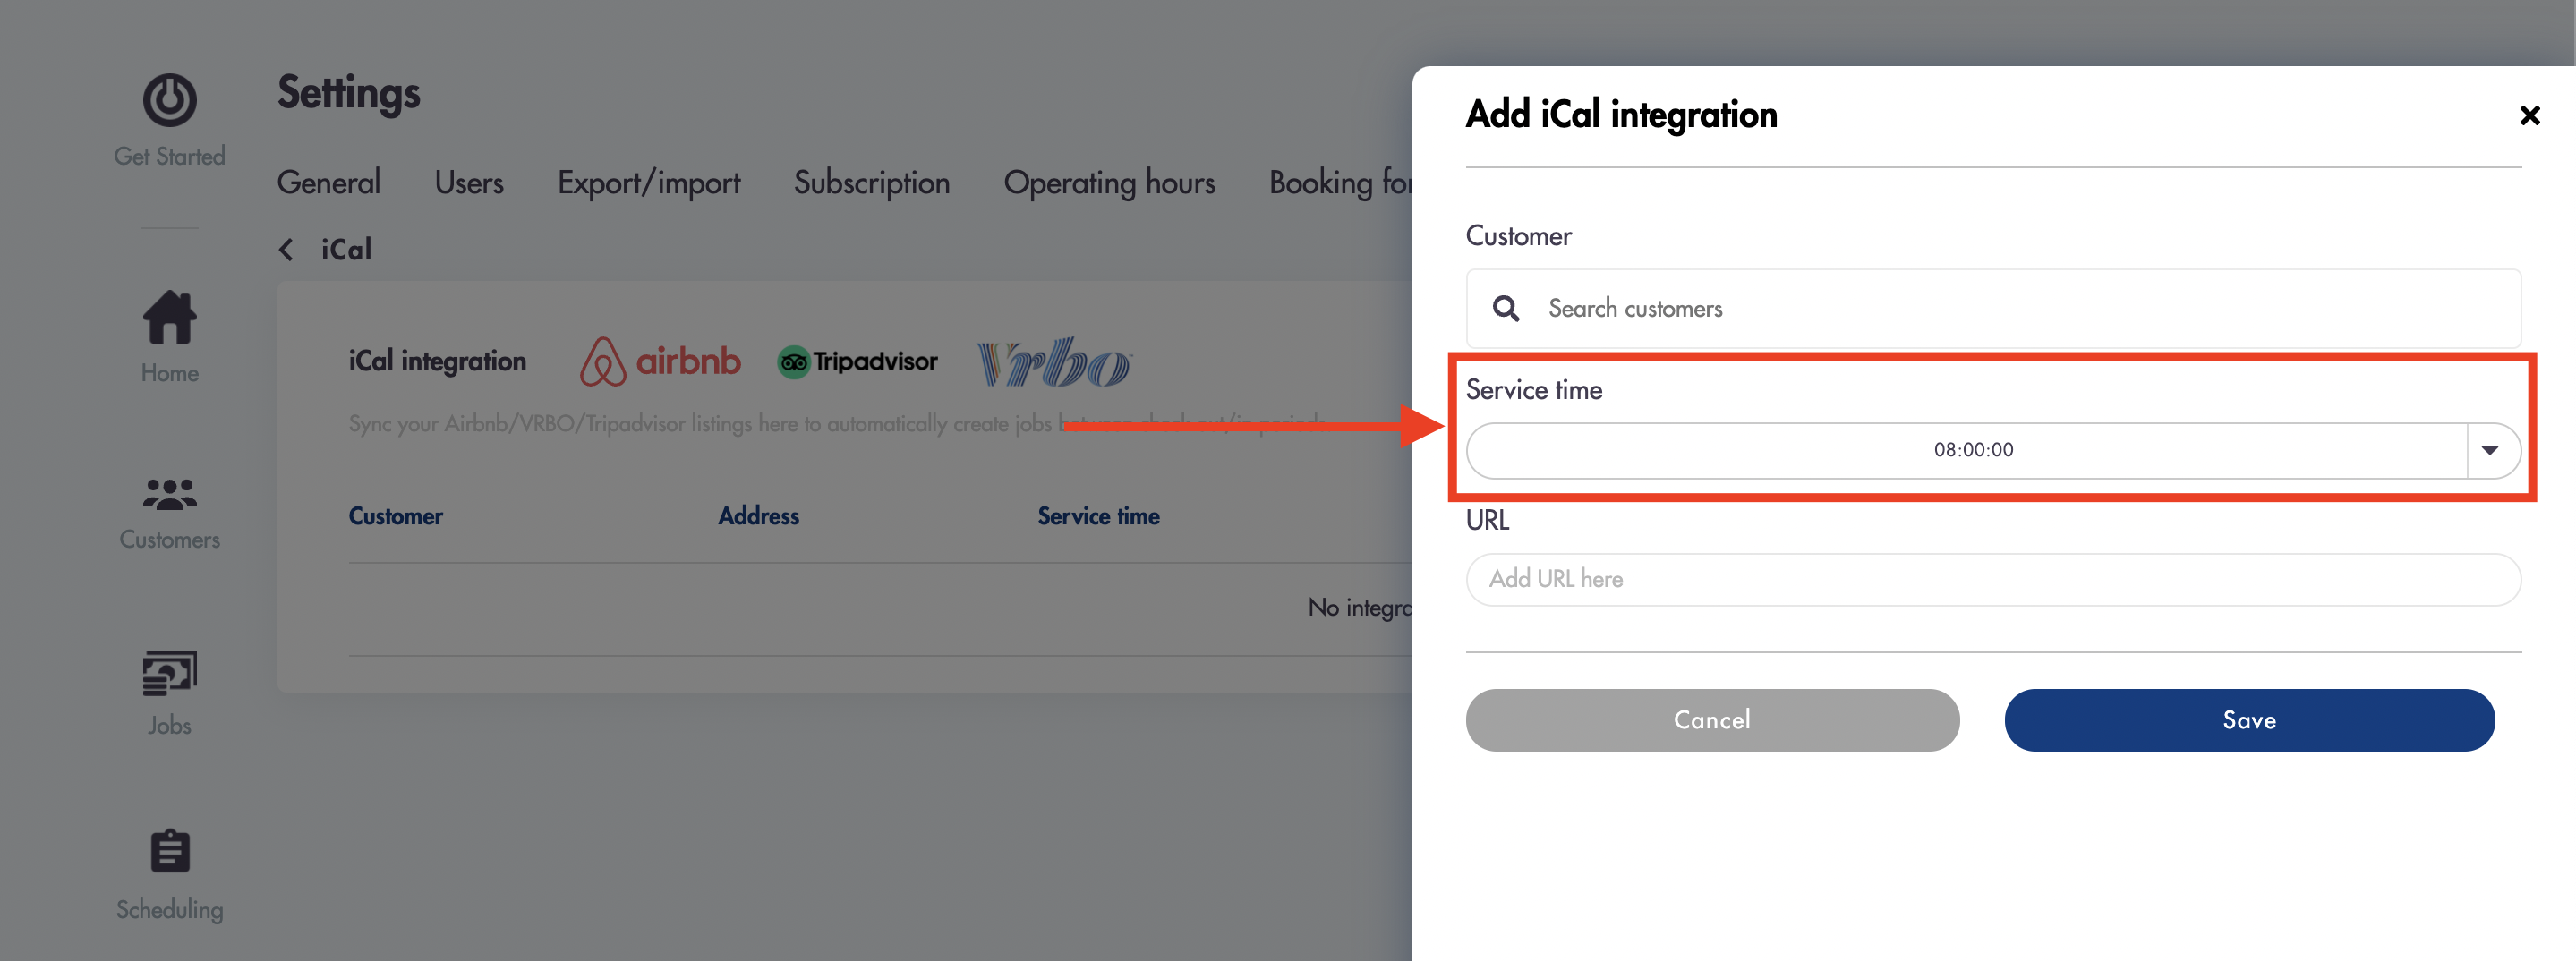 AirBnb/VRBO/TripAdvisor iCal calendar integration